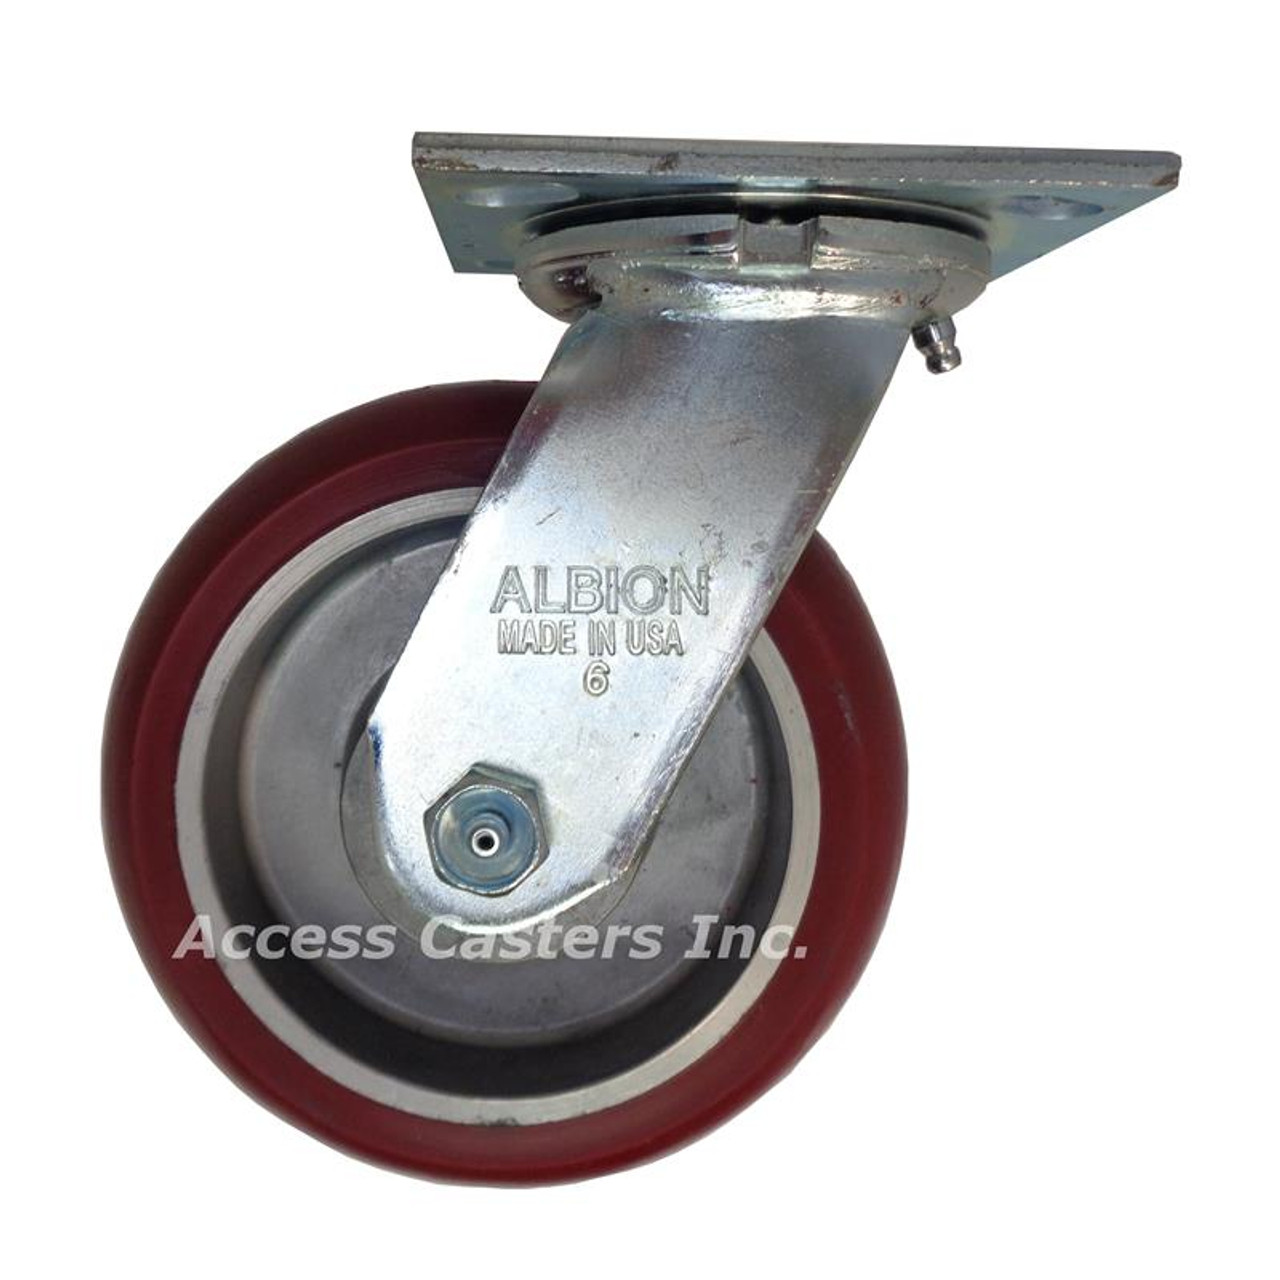 16AX05228S Albion 5" Swivel Caster with Ergonomic Polyurethane Wheel